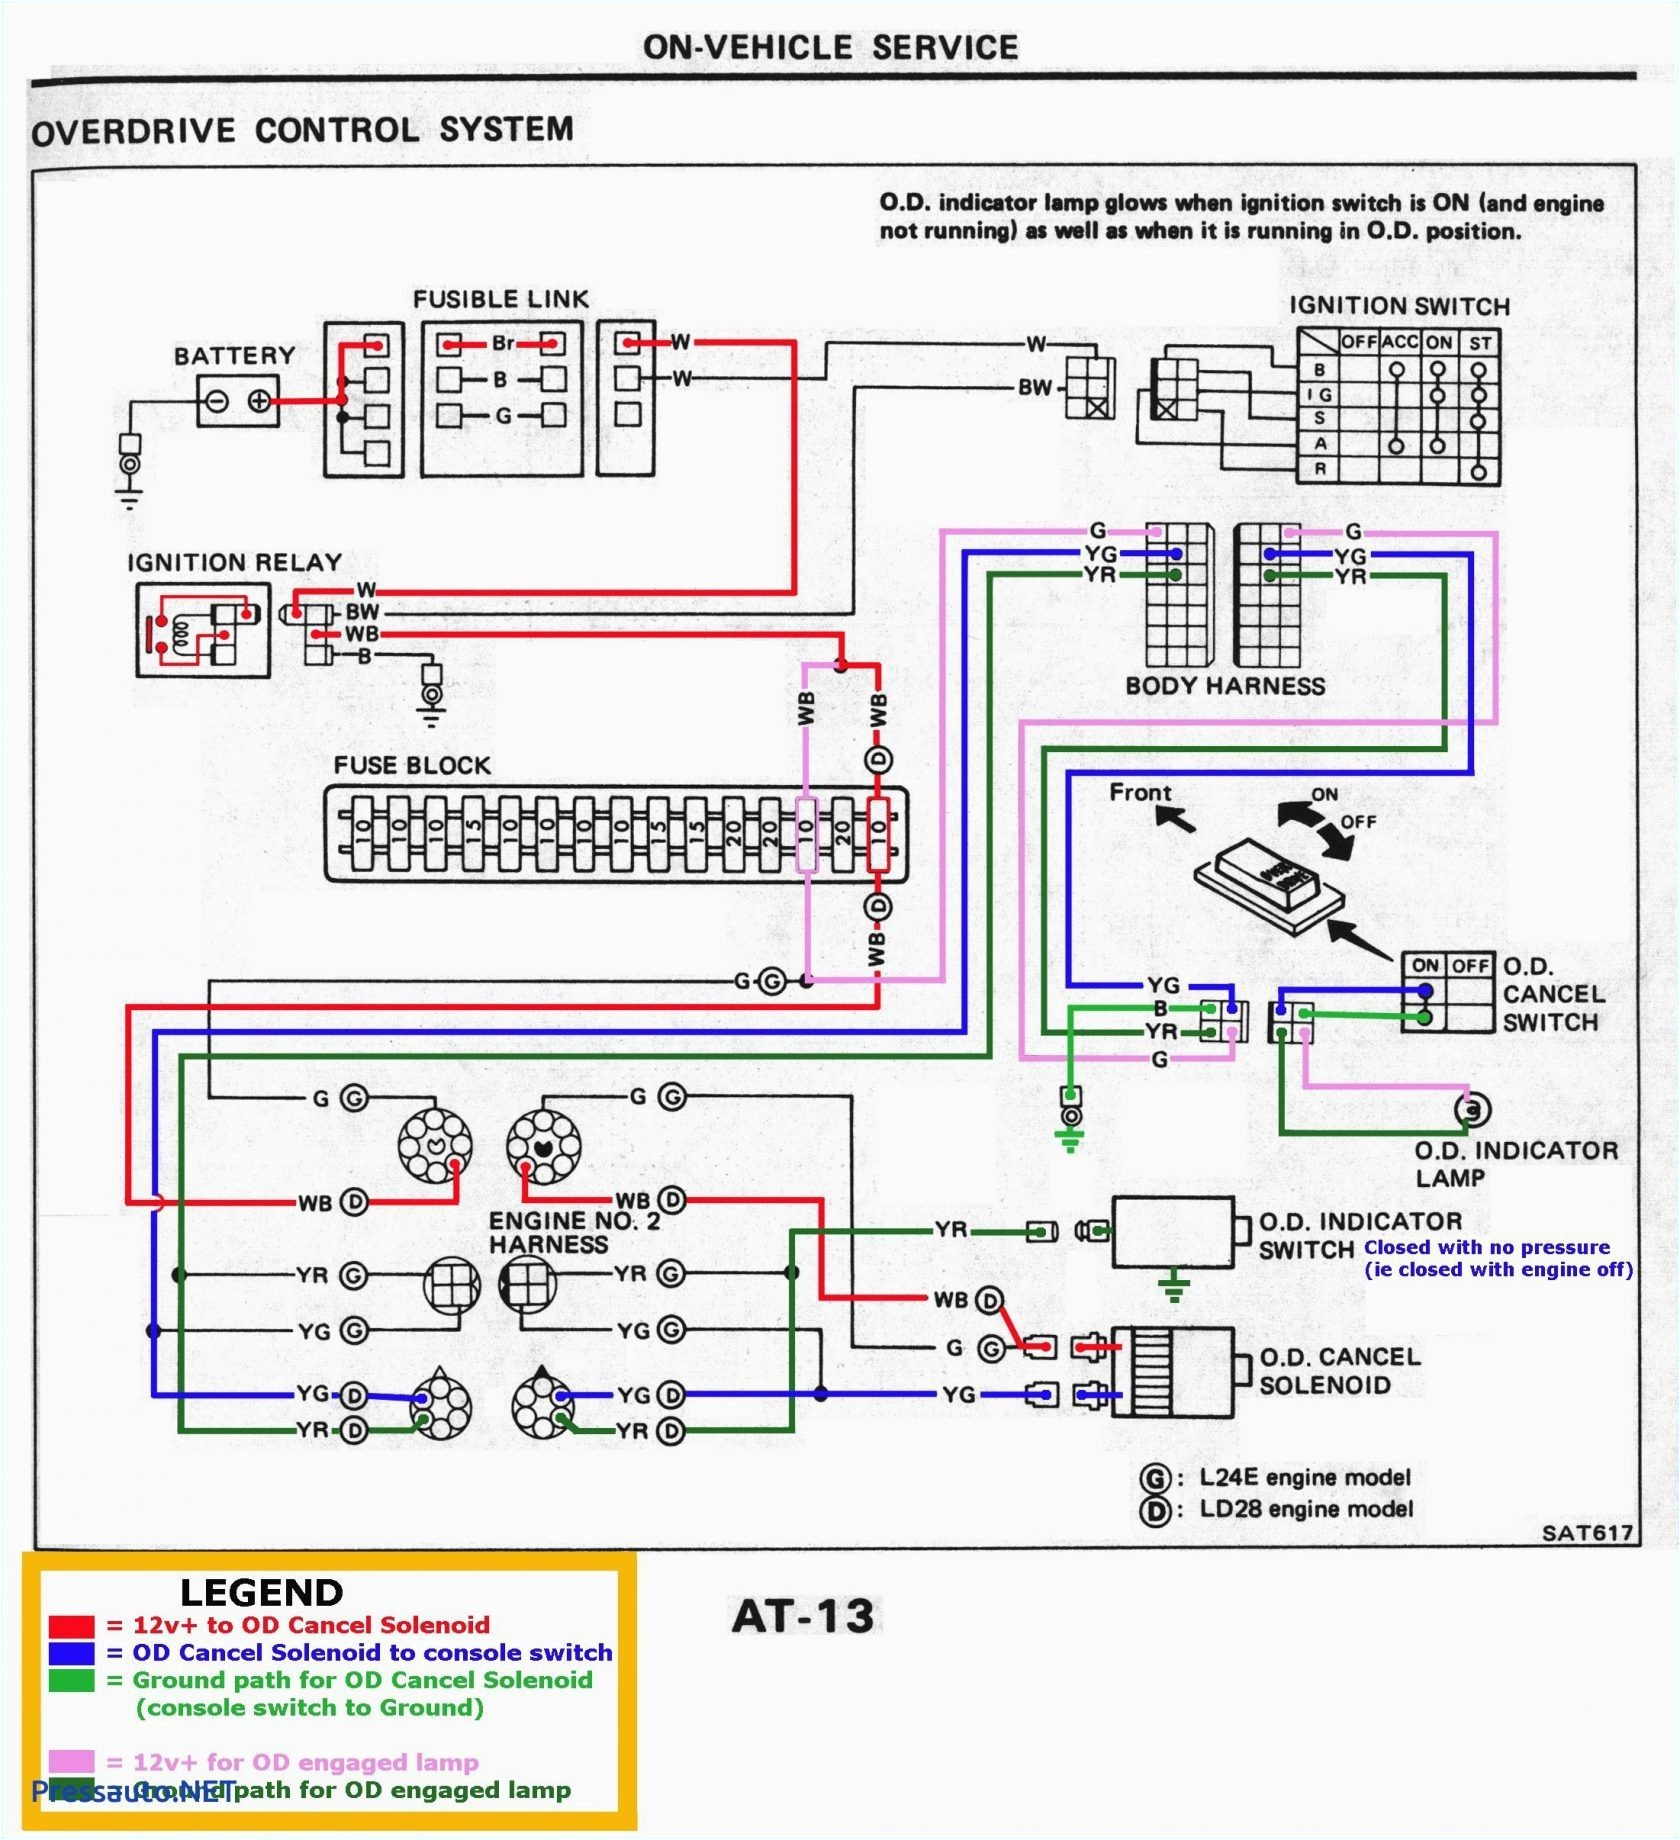 fuse indicator circuit diagram basiccircuit circuit diagram wiring dc current indicator 6 basiccircuit circuit diagram seekiccom